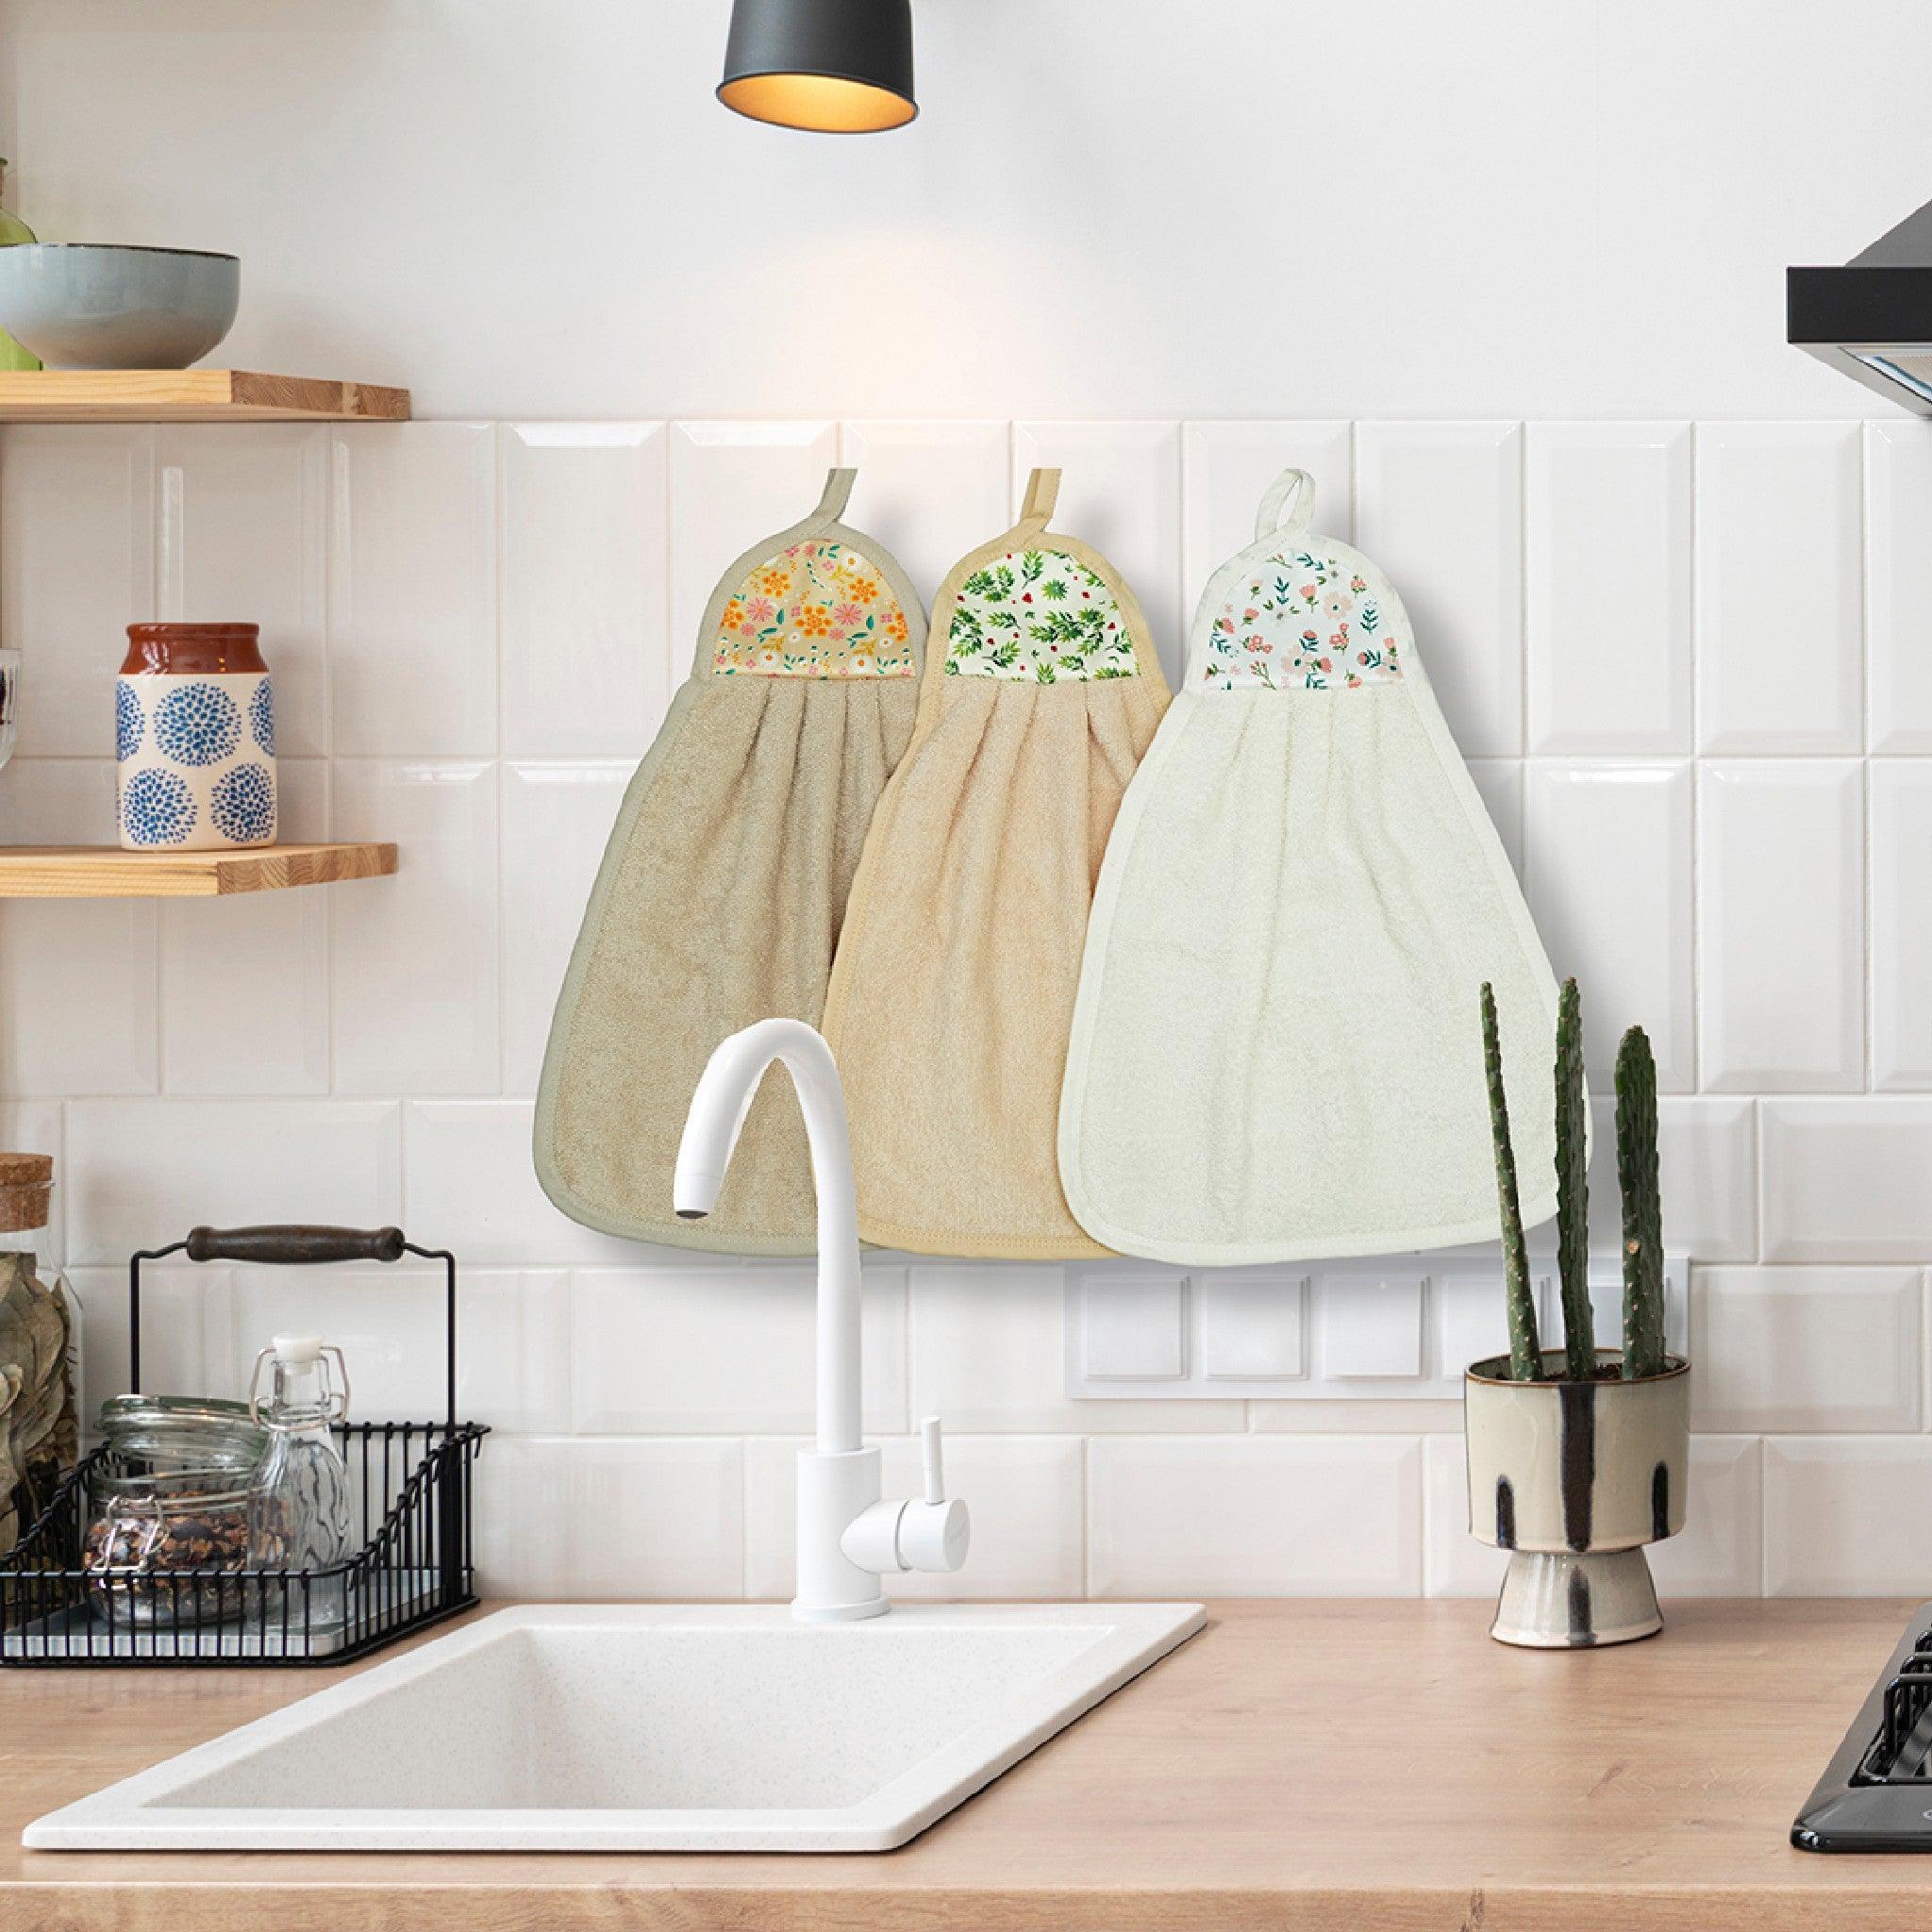 Wash Basin/Kitchen Hanging Hand Towels Set